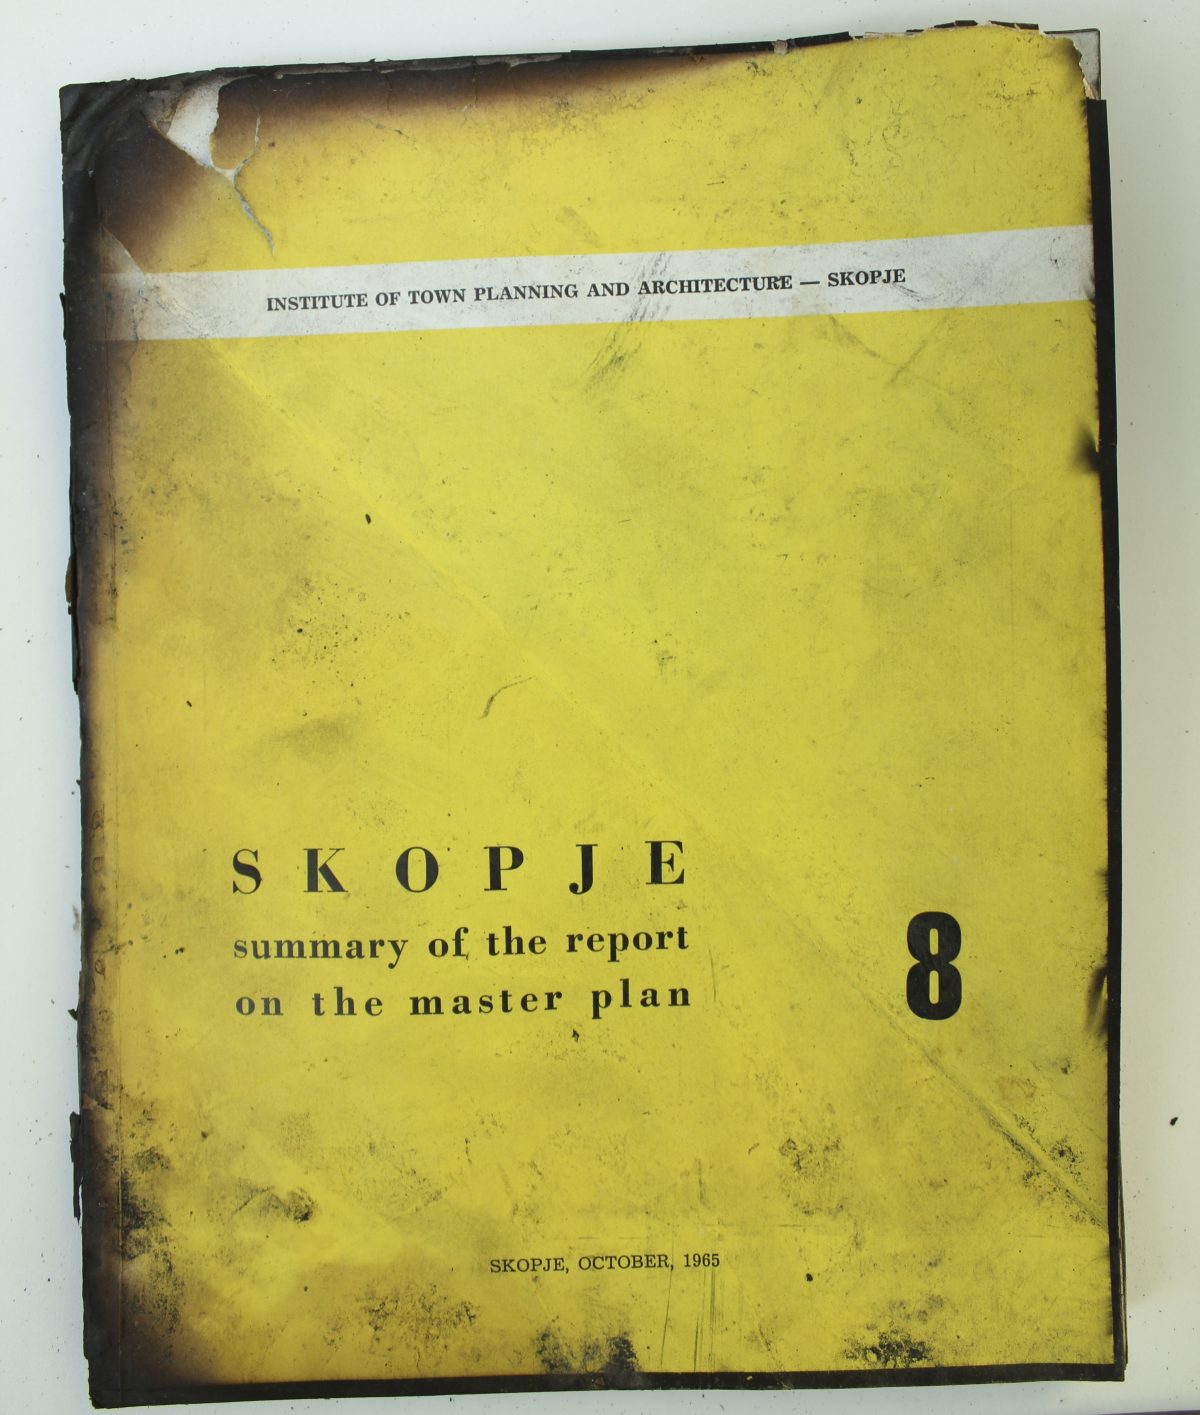 No.86 Press To Exit, Skopje